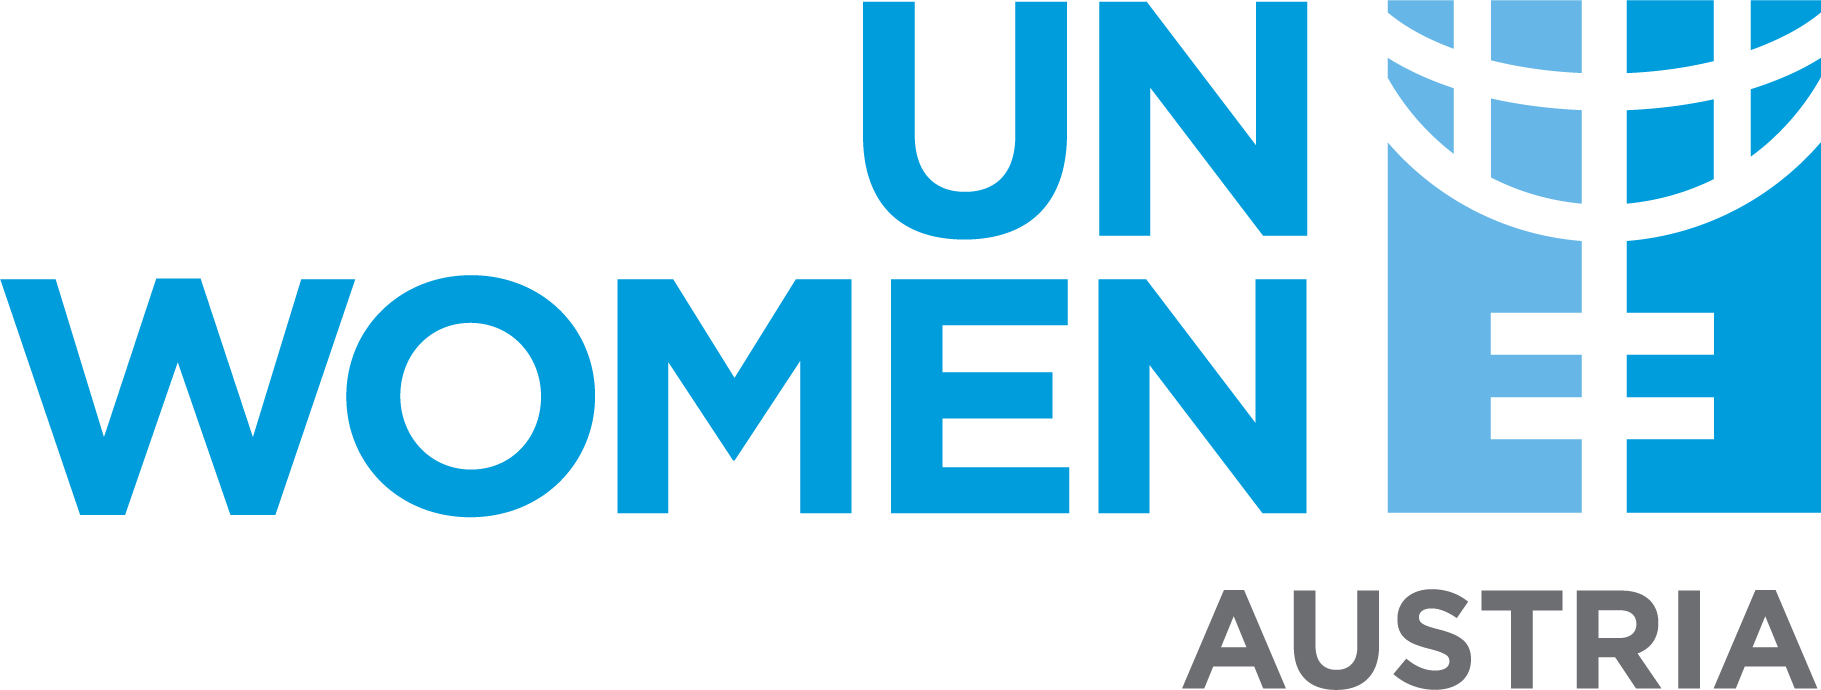 UN Women Logo